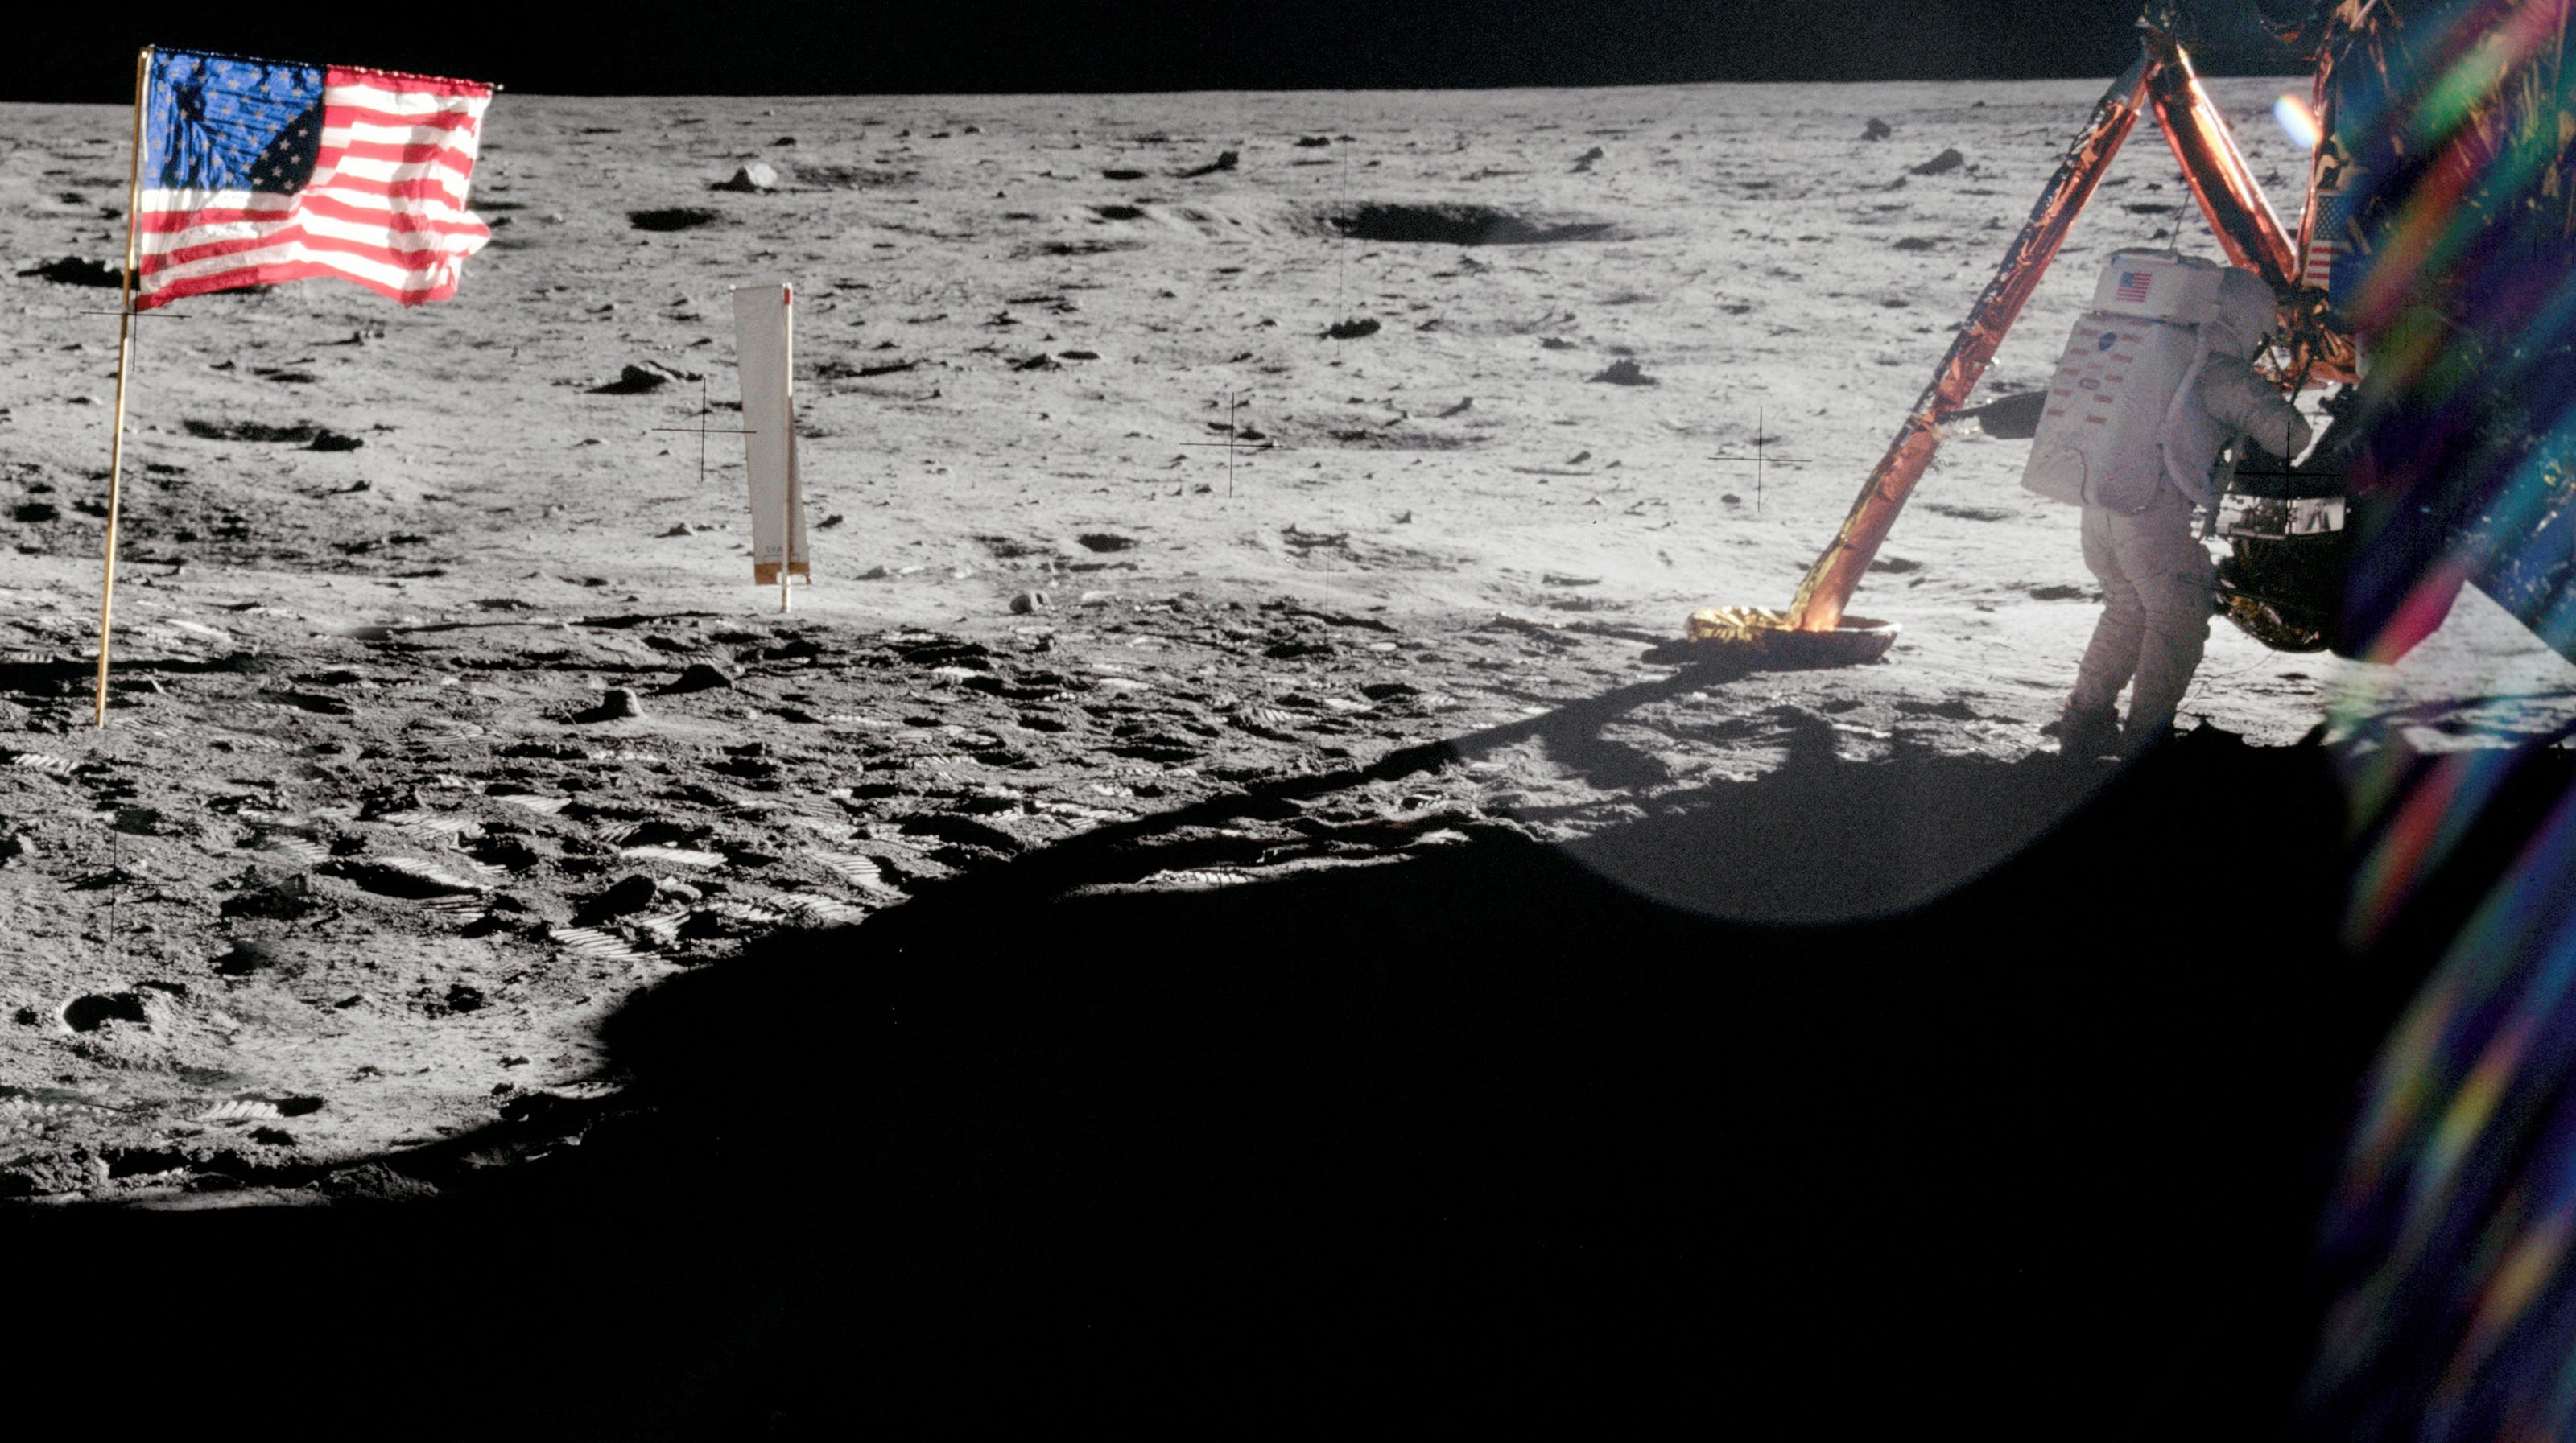 Armstrong on the moon. Армстронг первый на Луне.